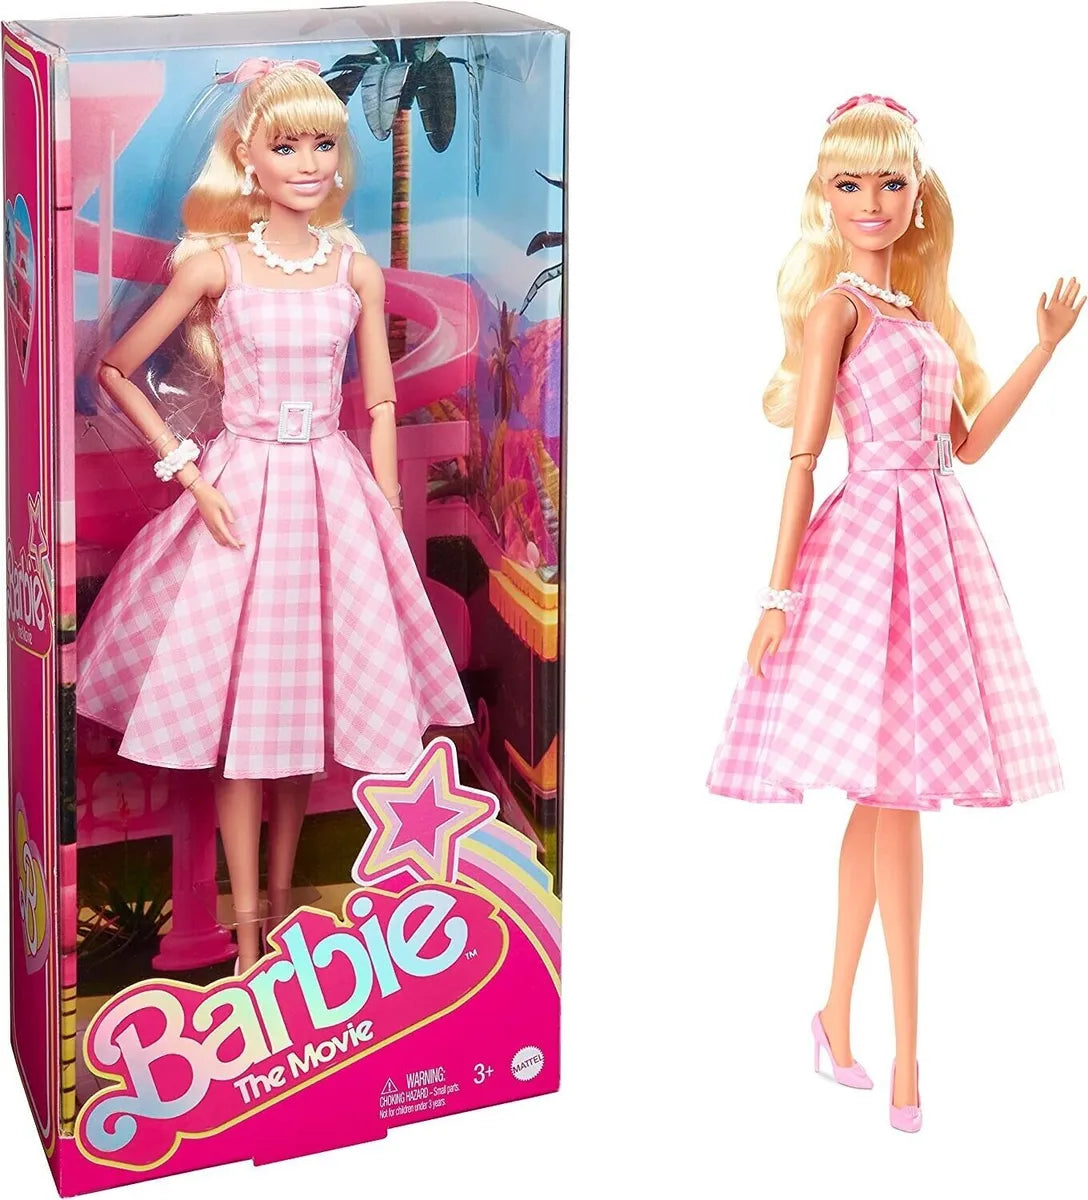 Barbie Movie Doll Pink & White Dress